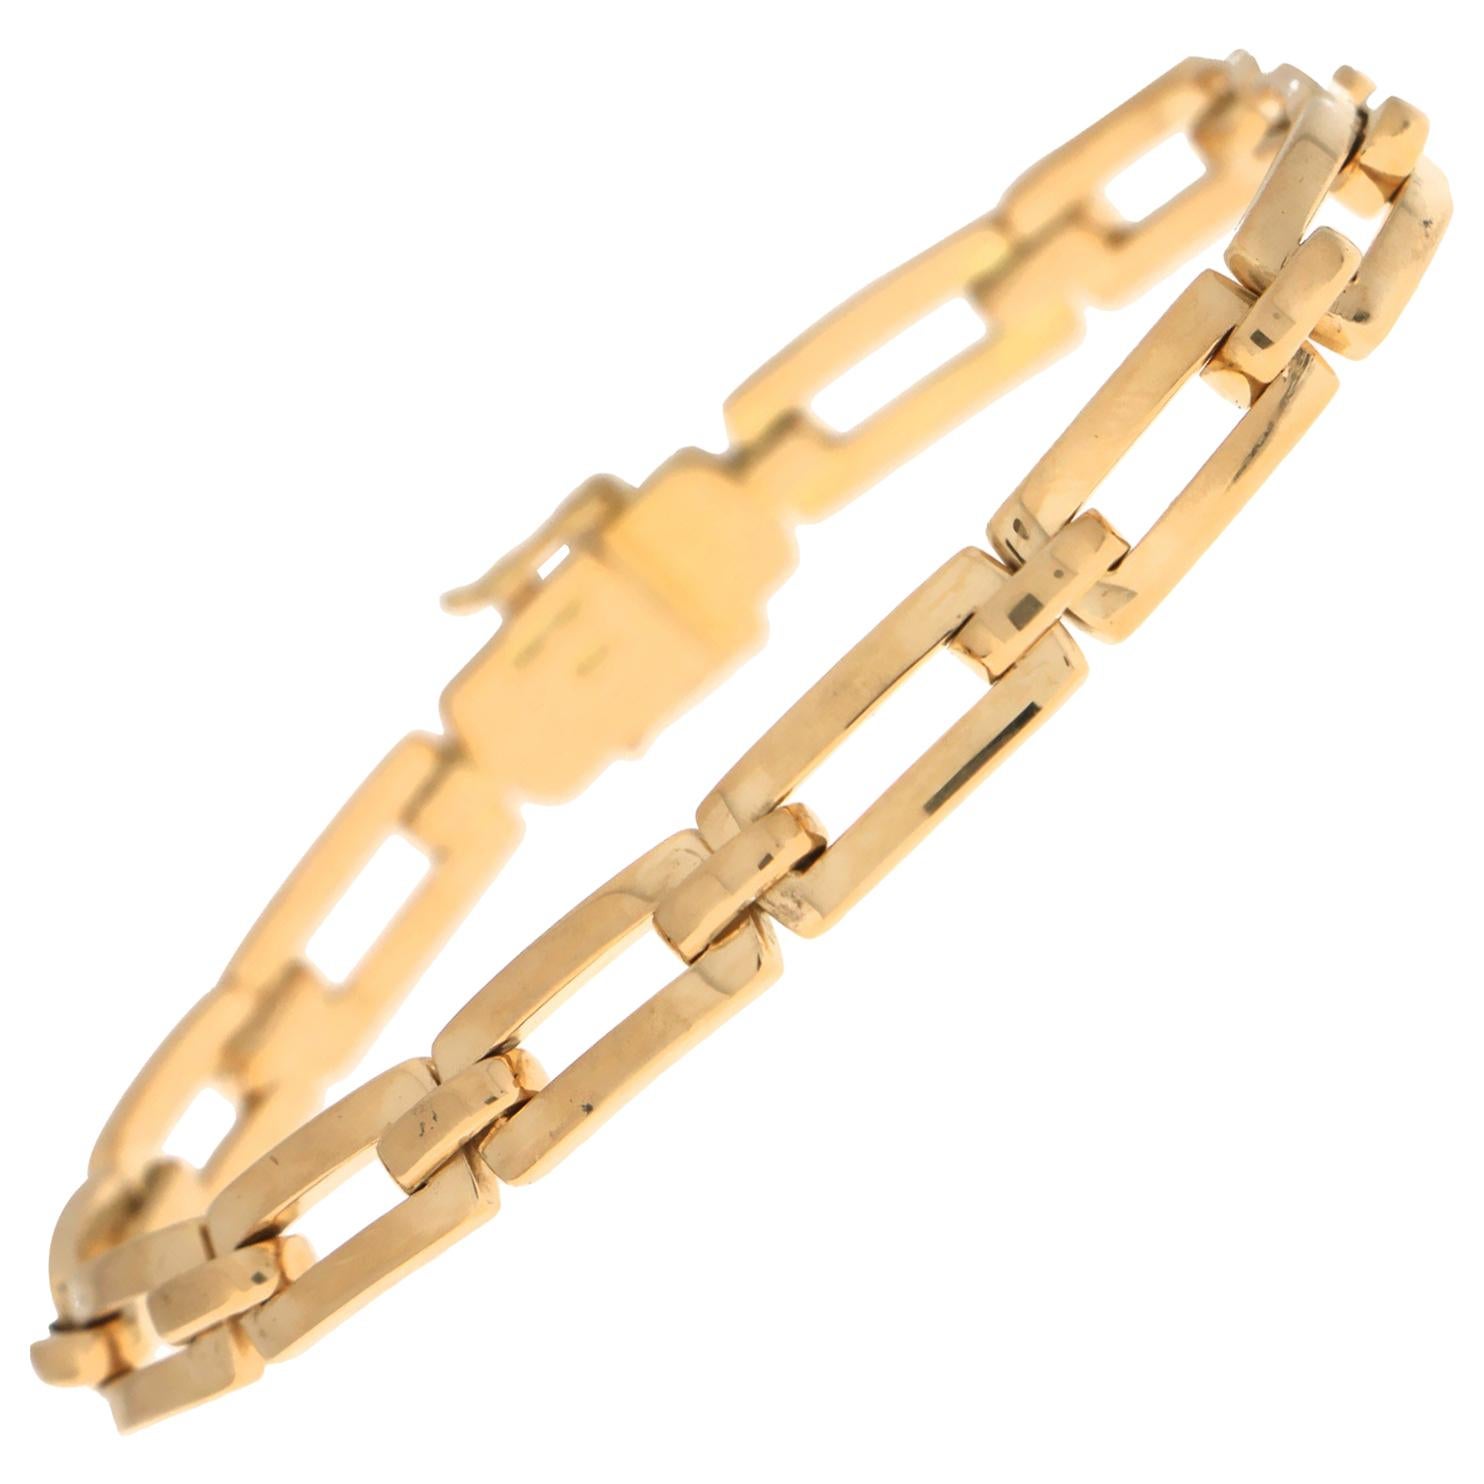 Cartier Chain Link Bracelet in Solid 18 Karat Yellow Gold